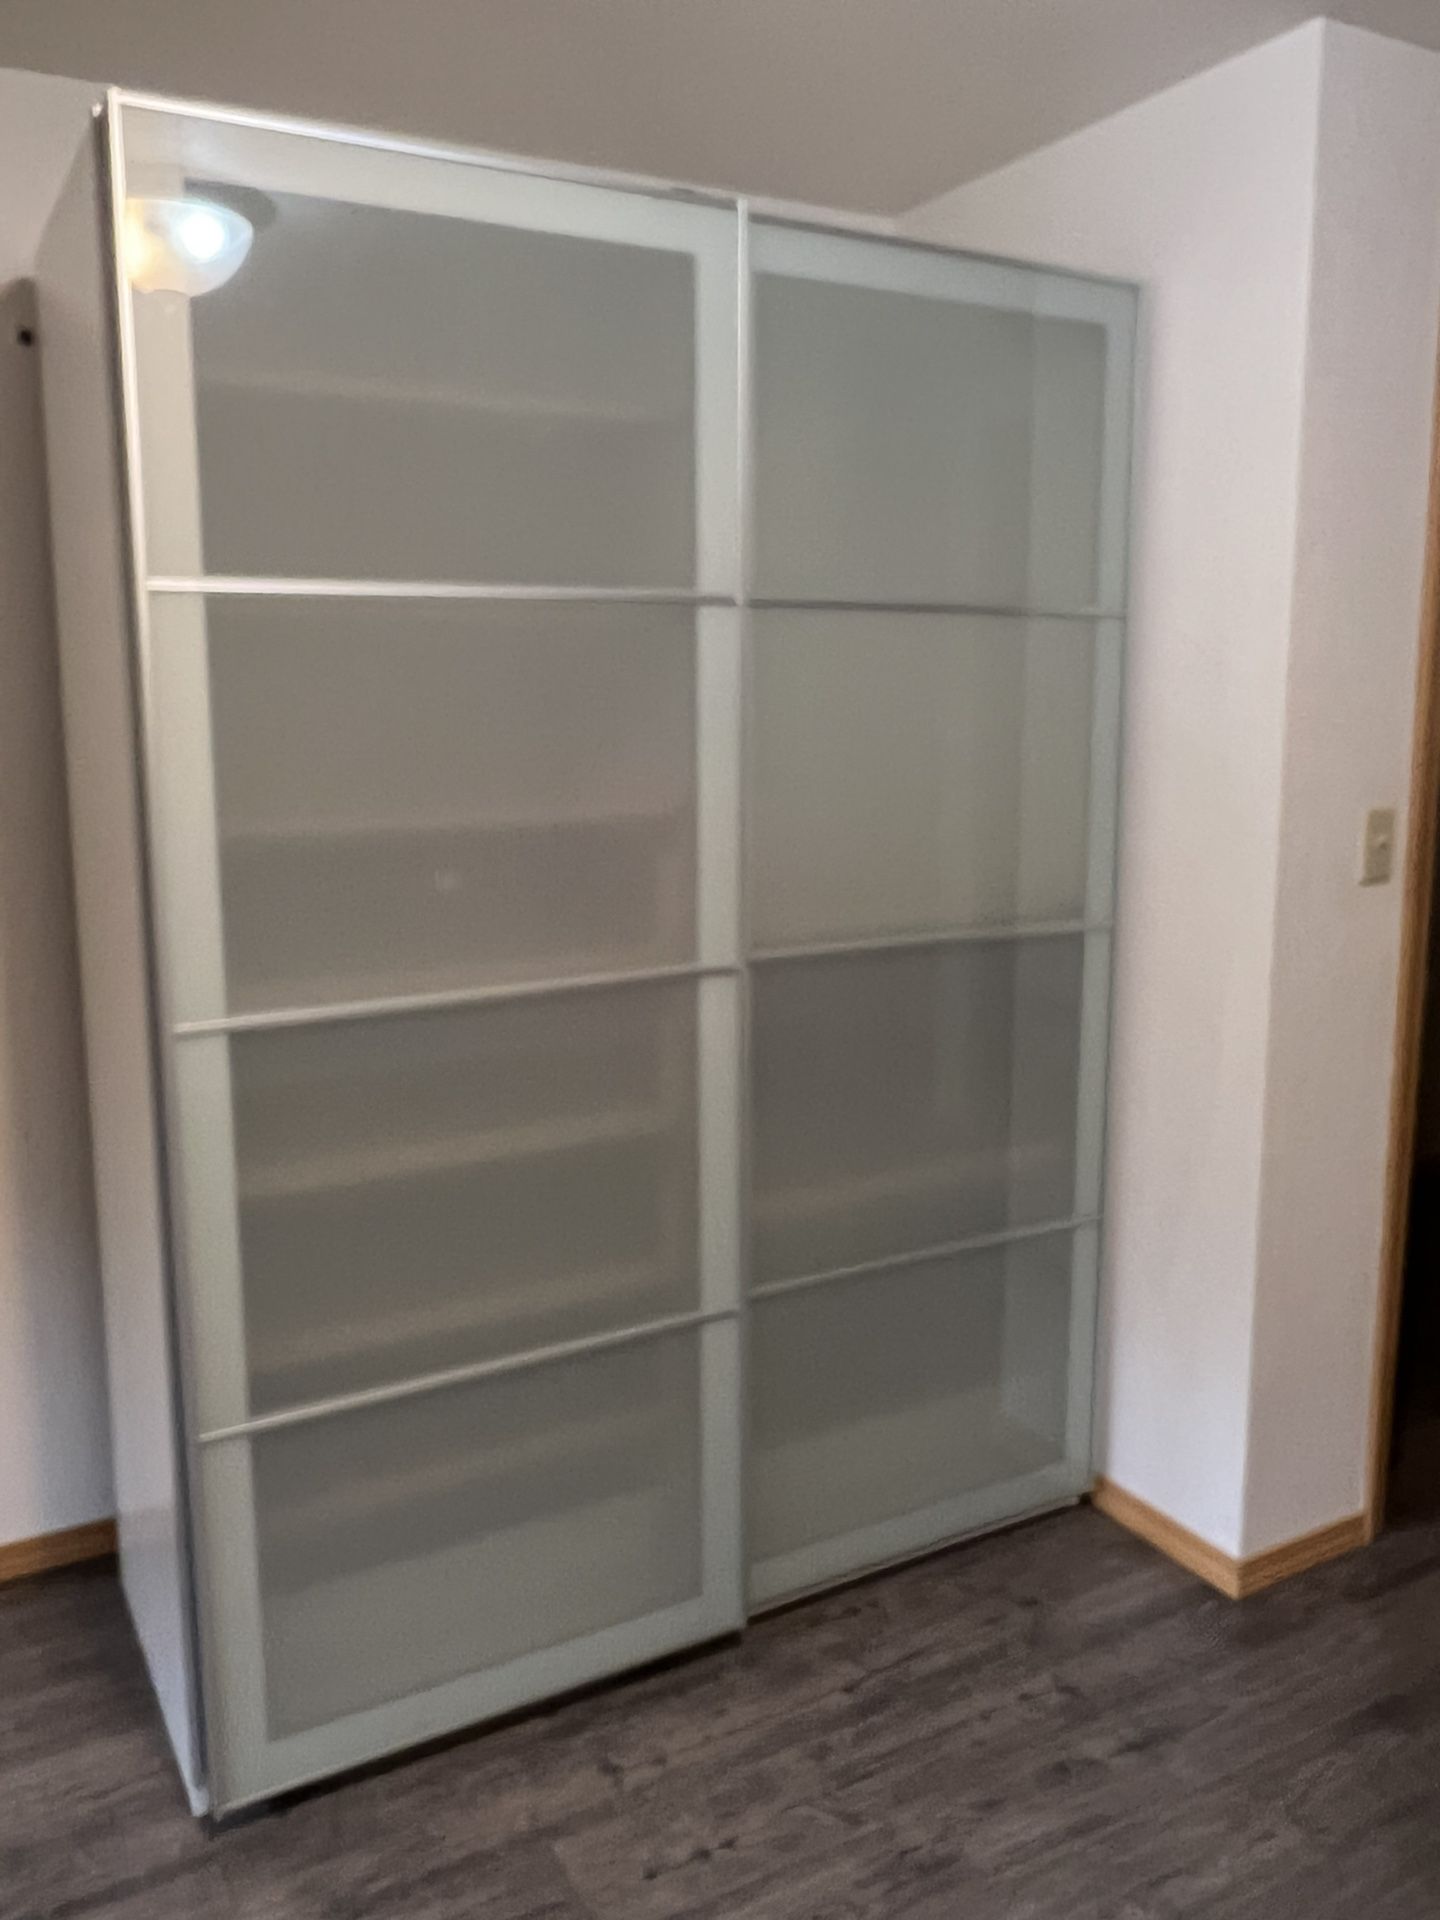 Wardrobe - IKEA Pax Wardrobe Frame With Sliding Glass Doors